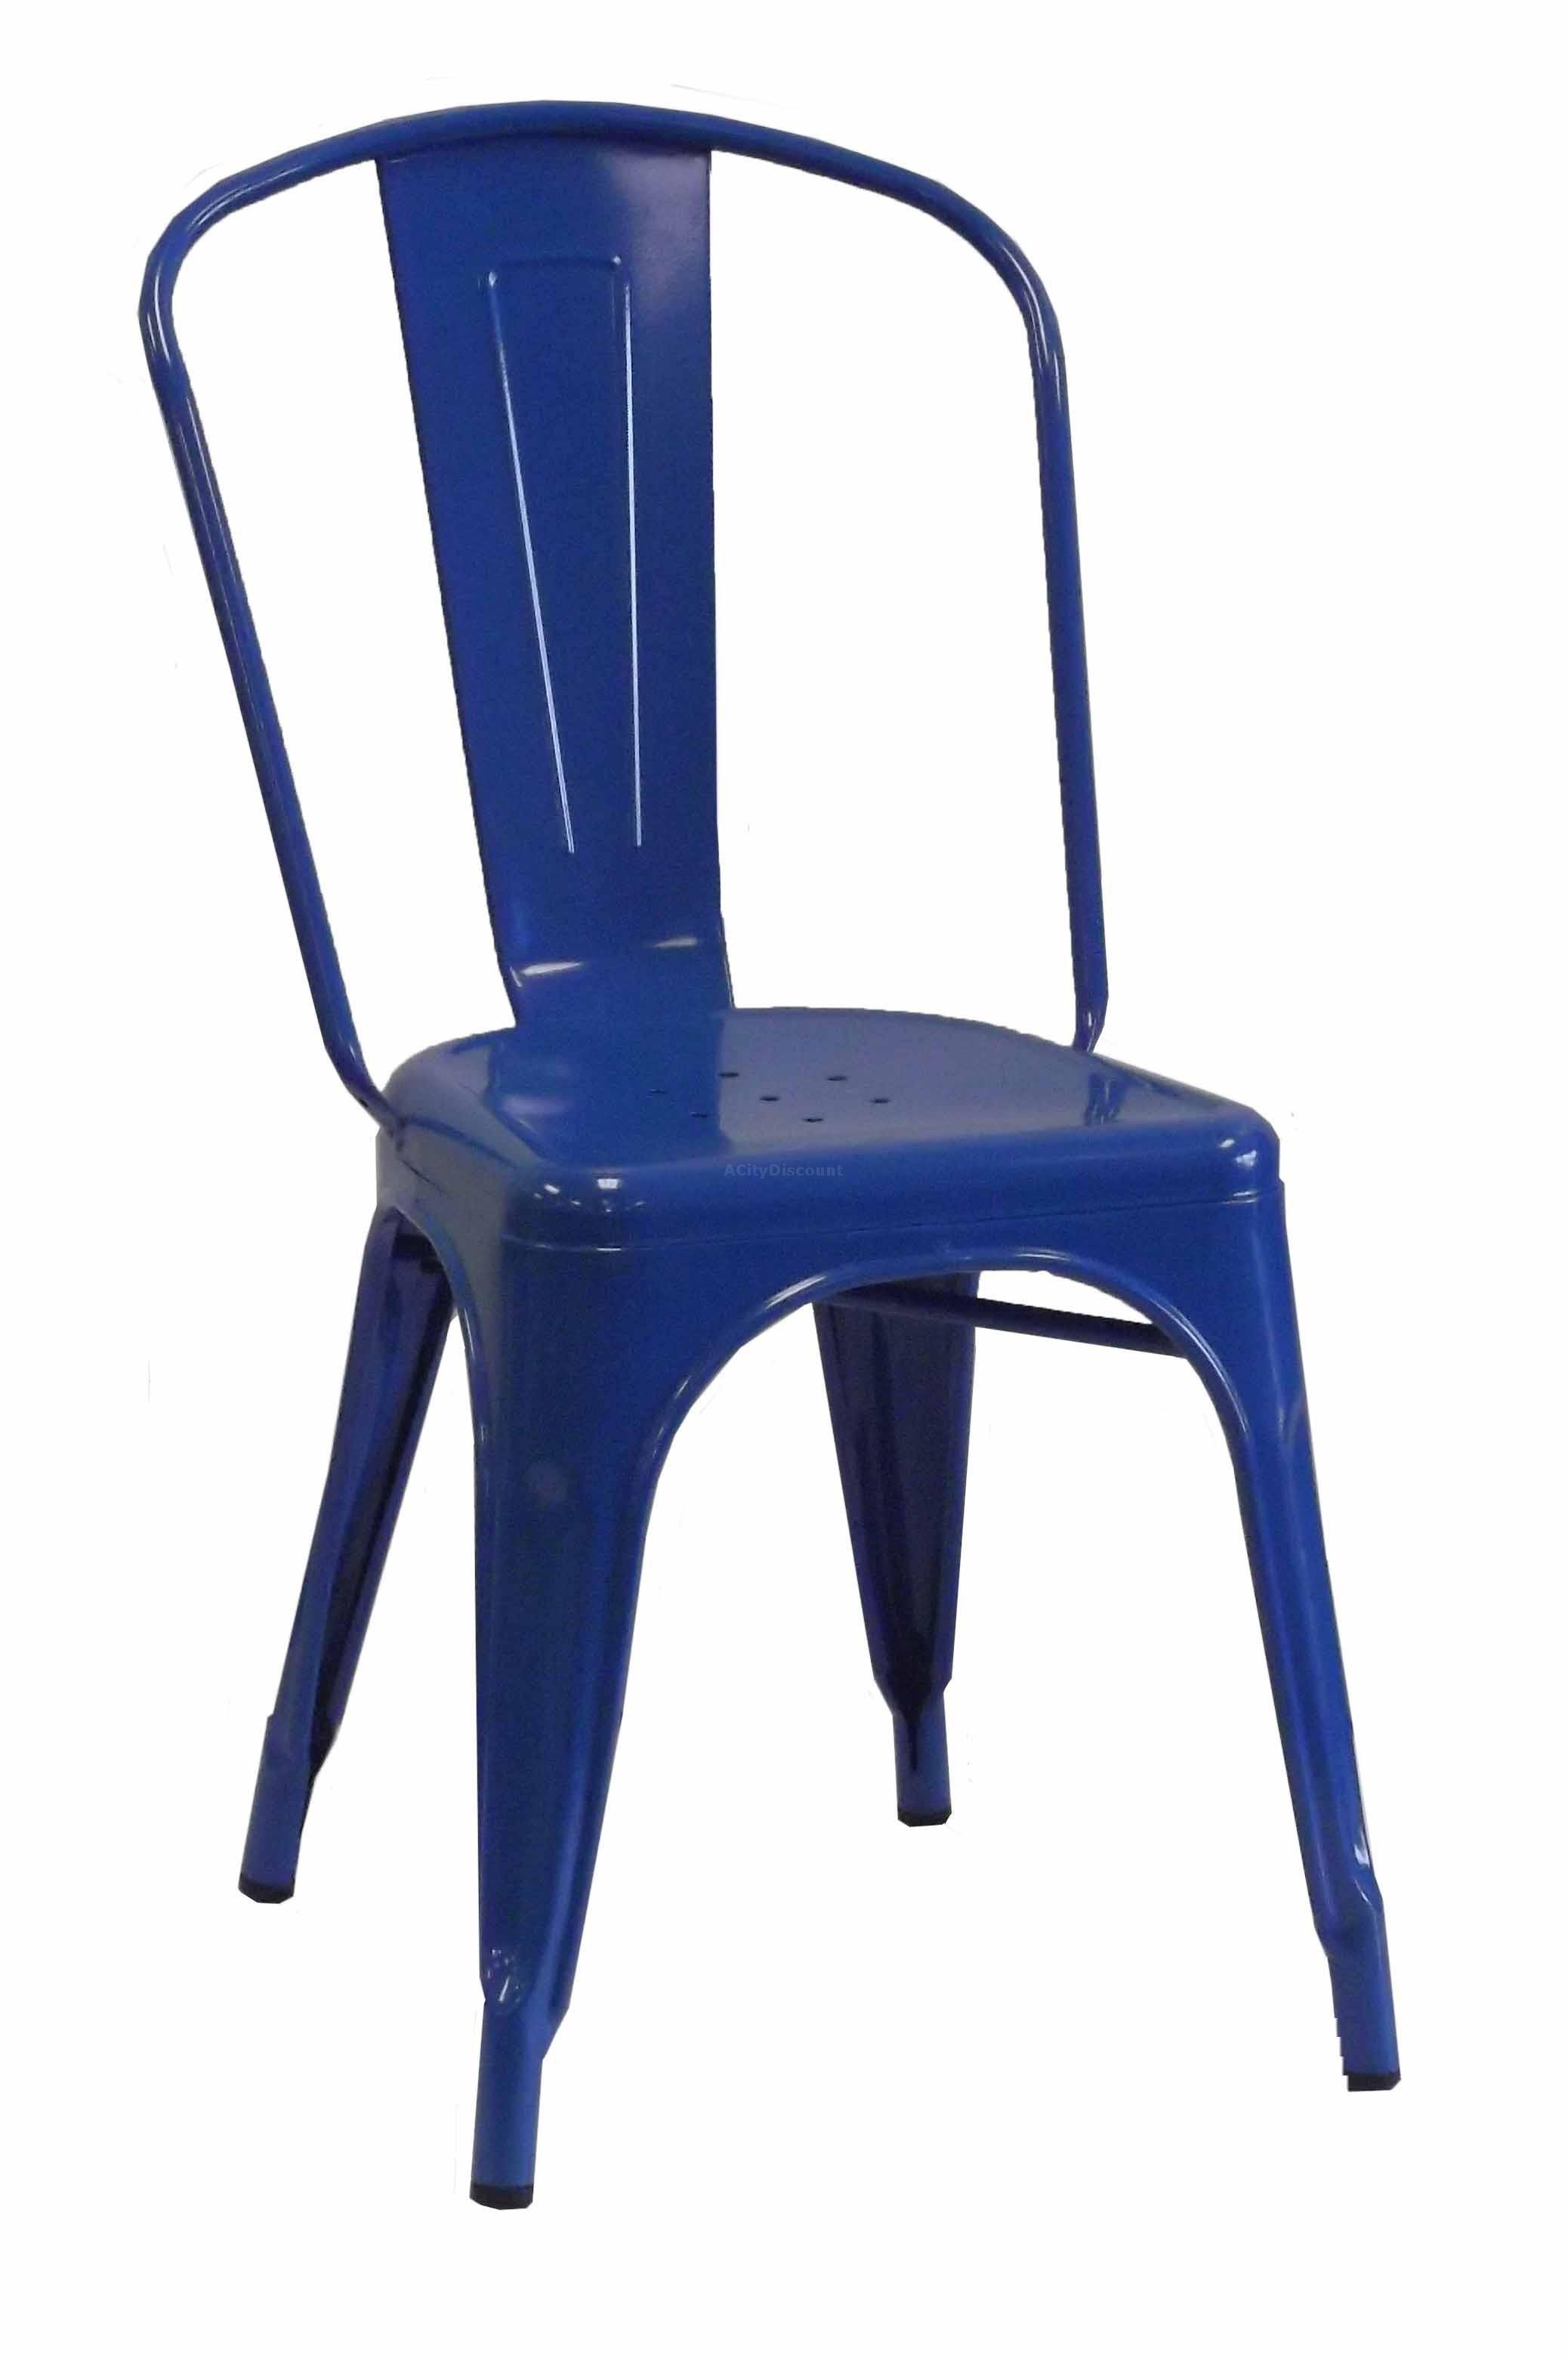 Atlanta Booth & Chair MC130 - Item 159575